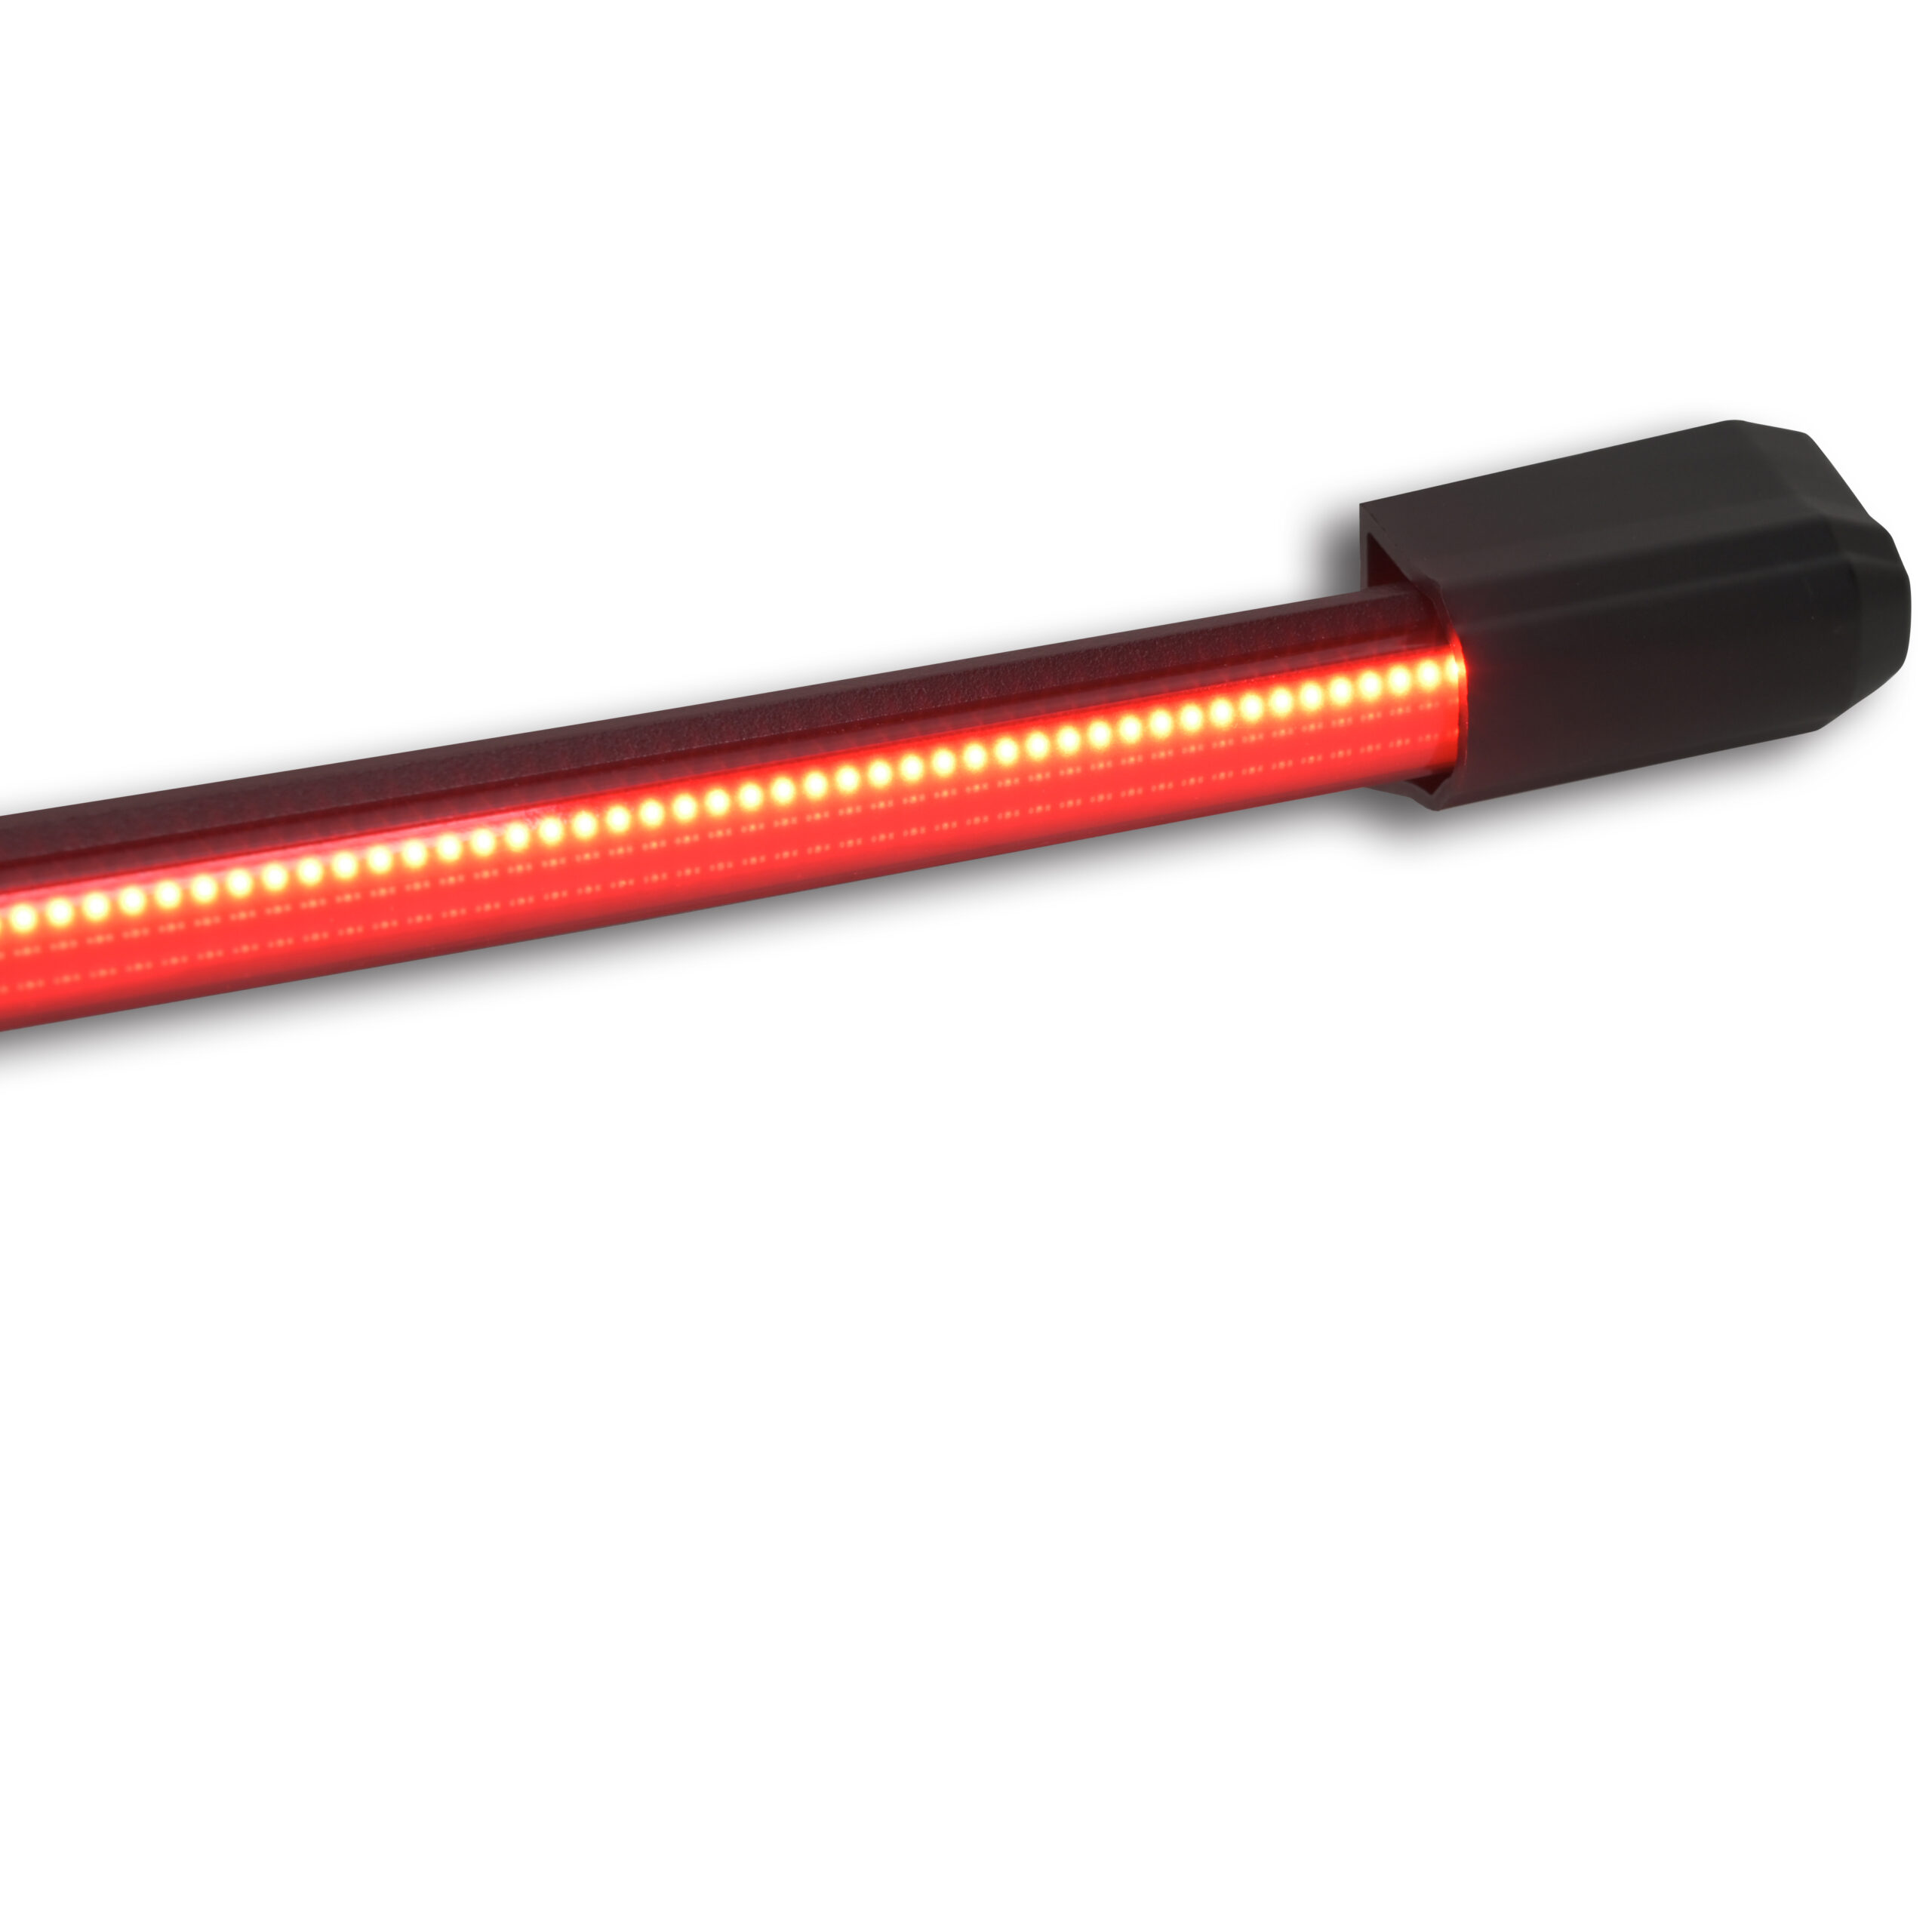 944710 - Putco E Blade Anti Collision 2.0 LED Light Bar - Fits